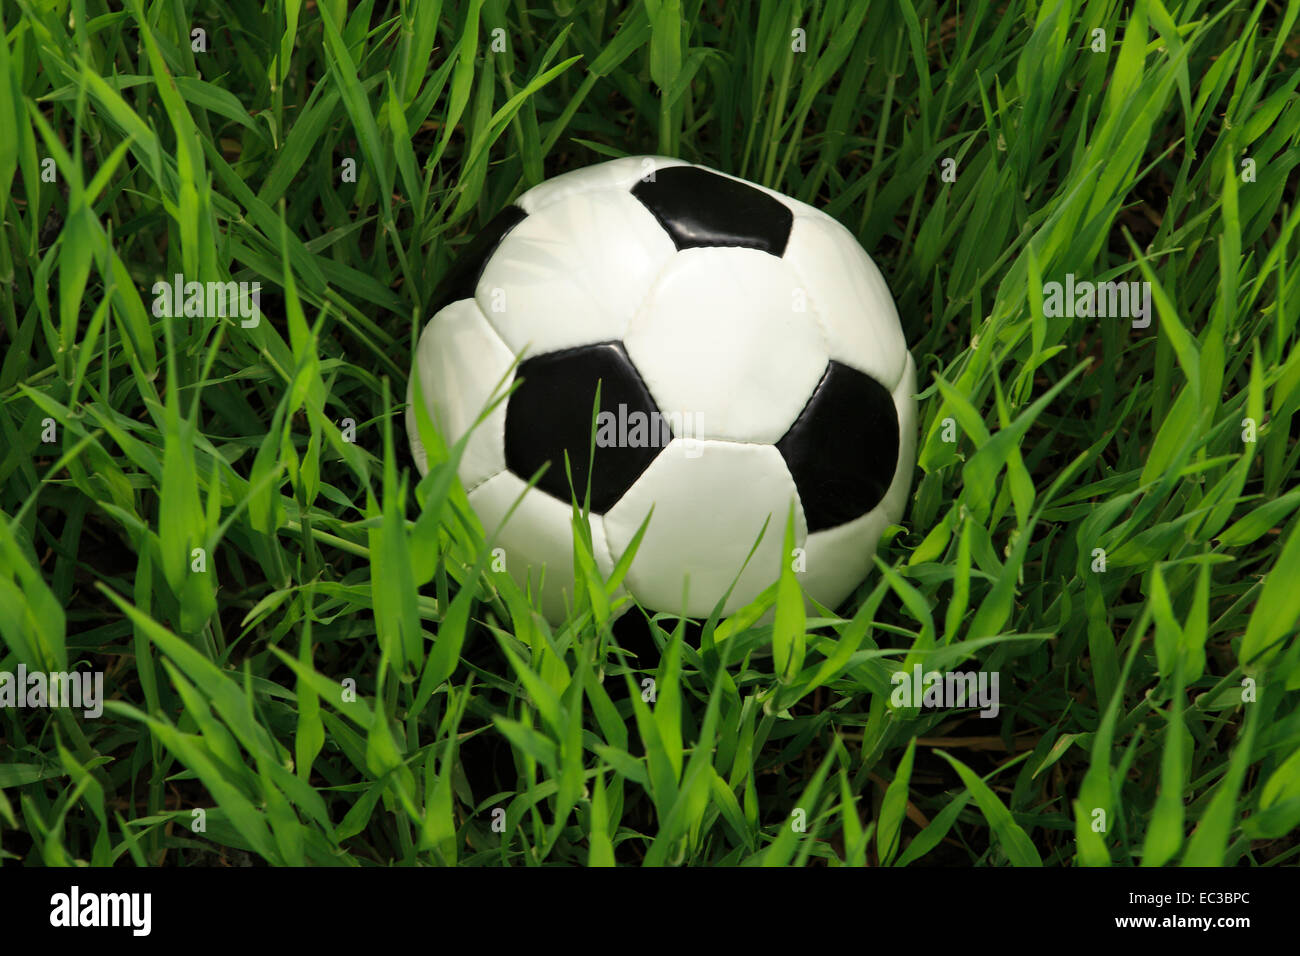 Original Leather Soccerball Stock Photo